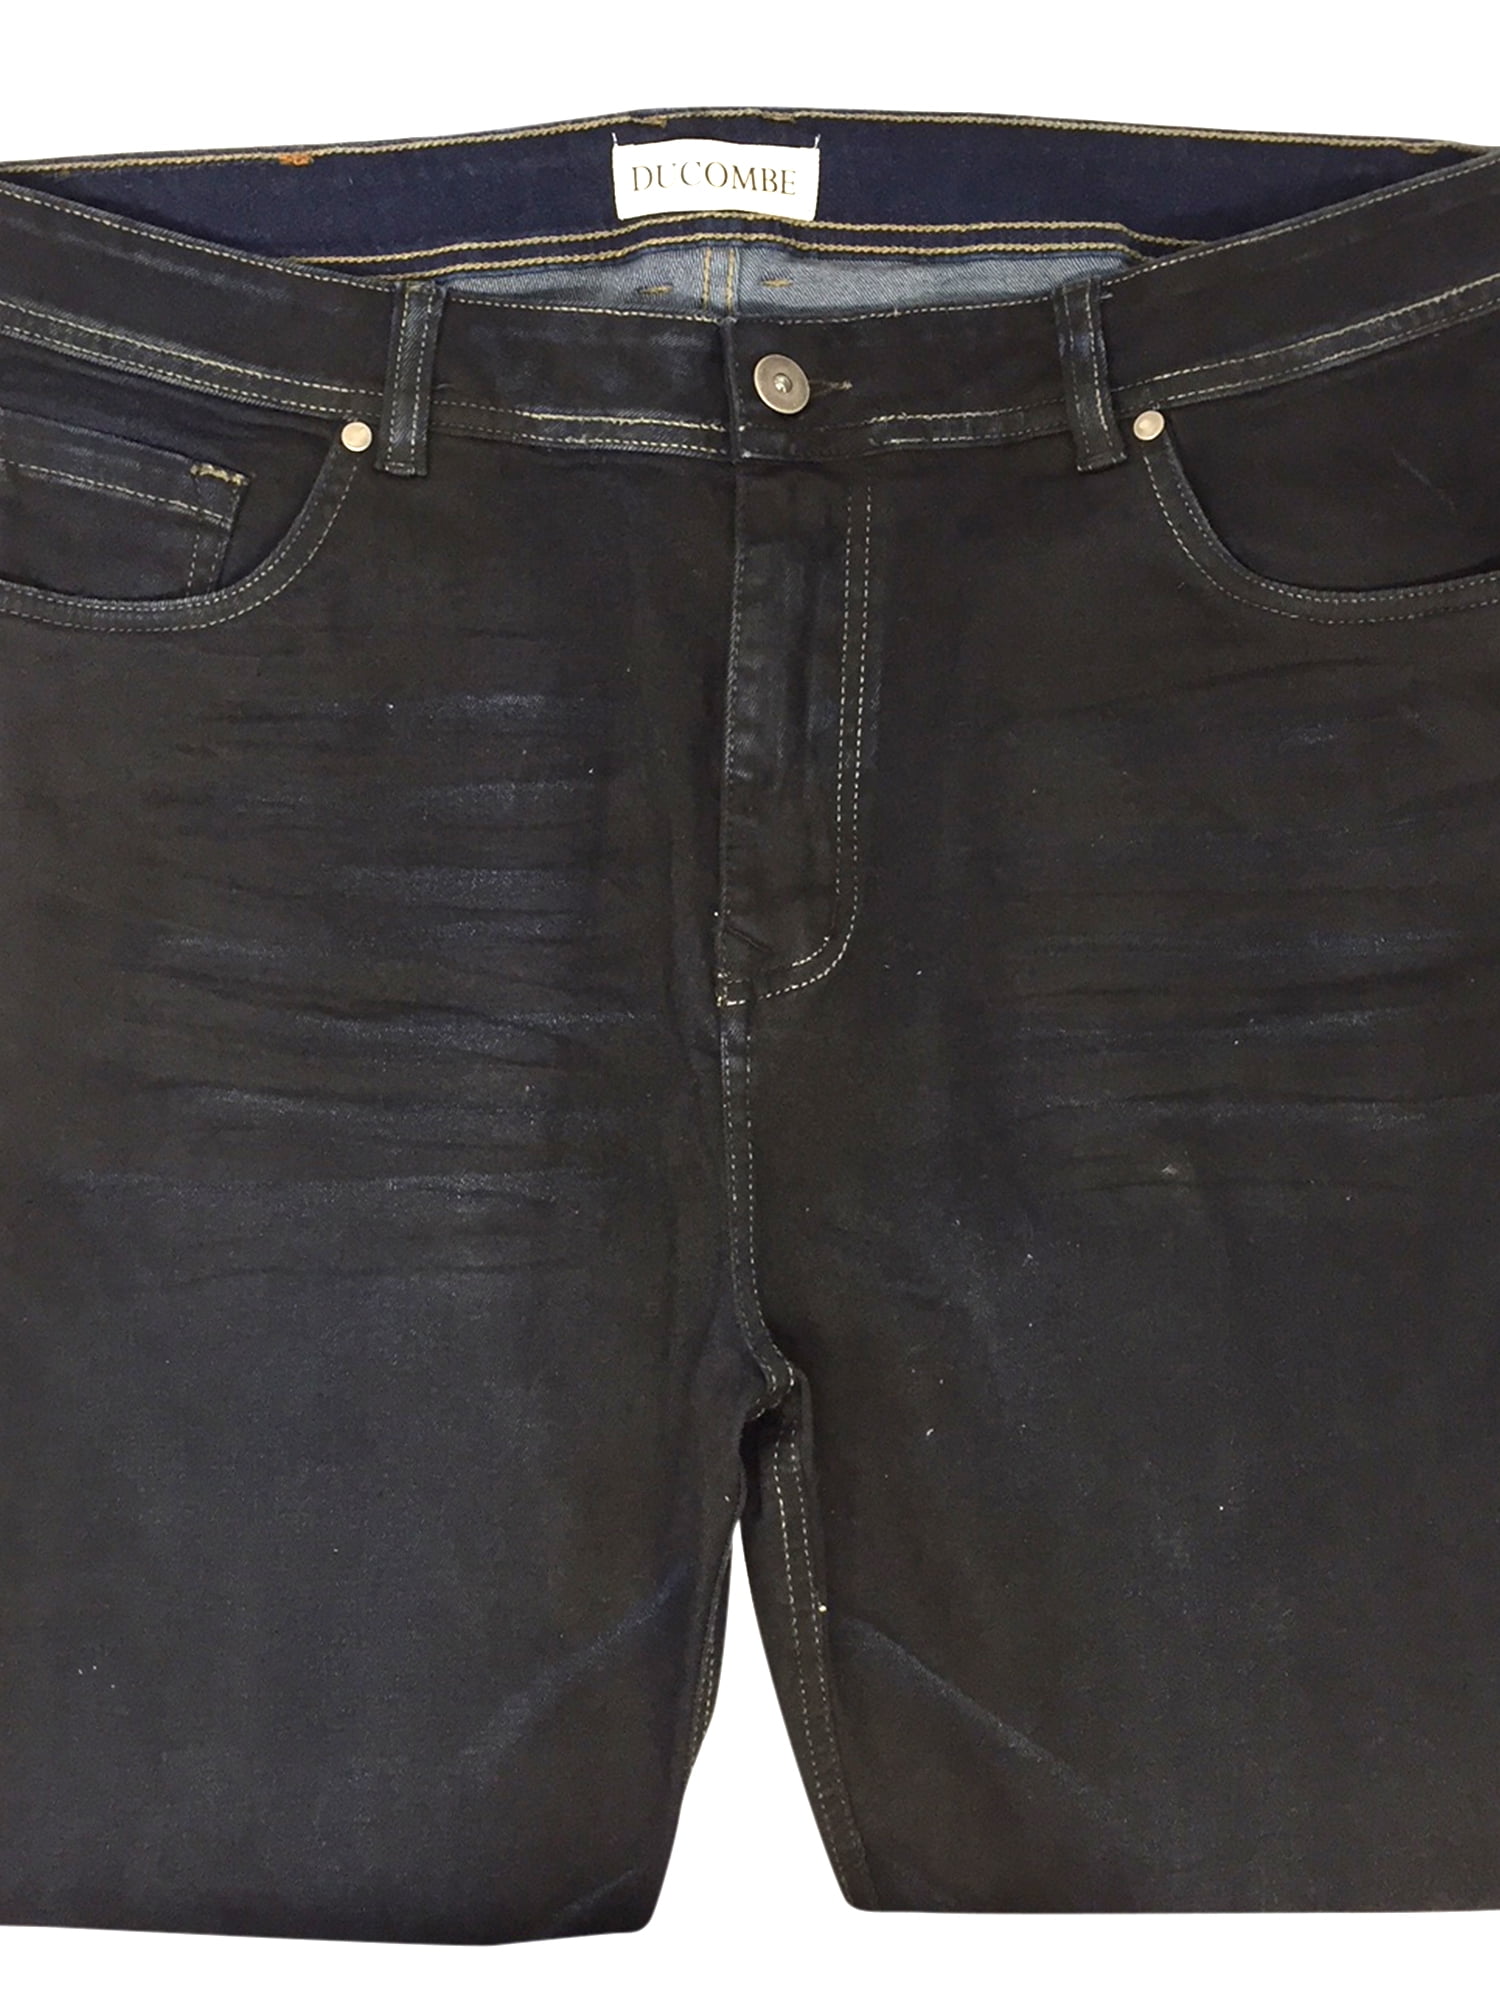 28 short mens jeans